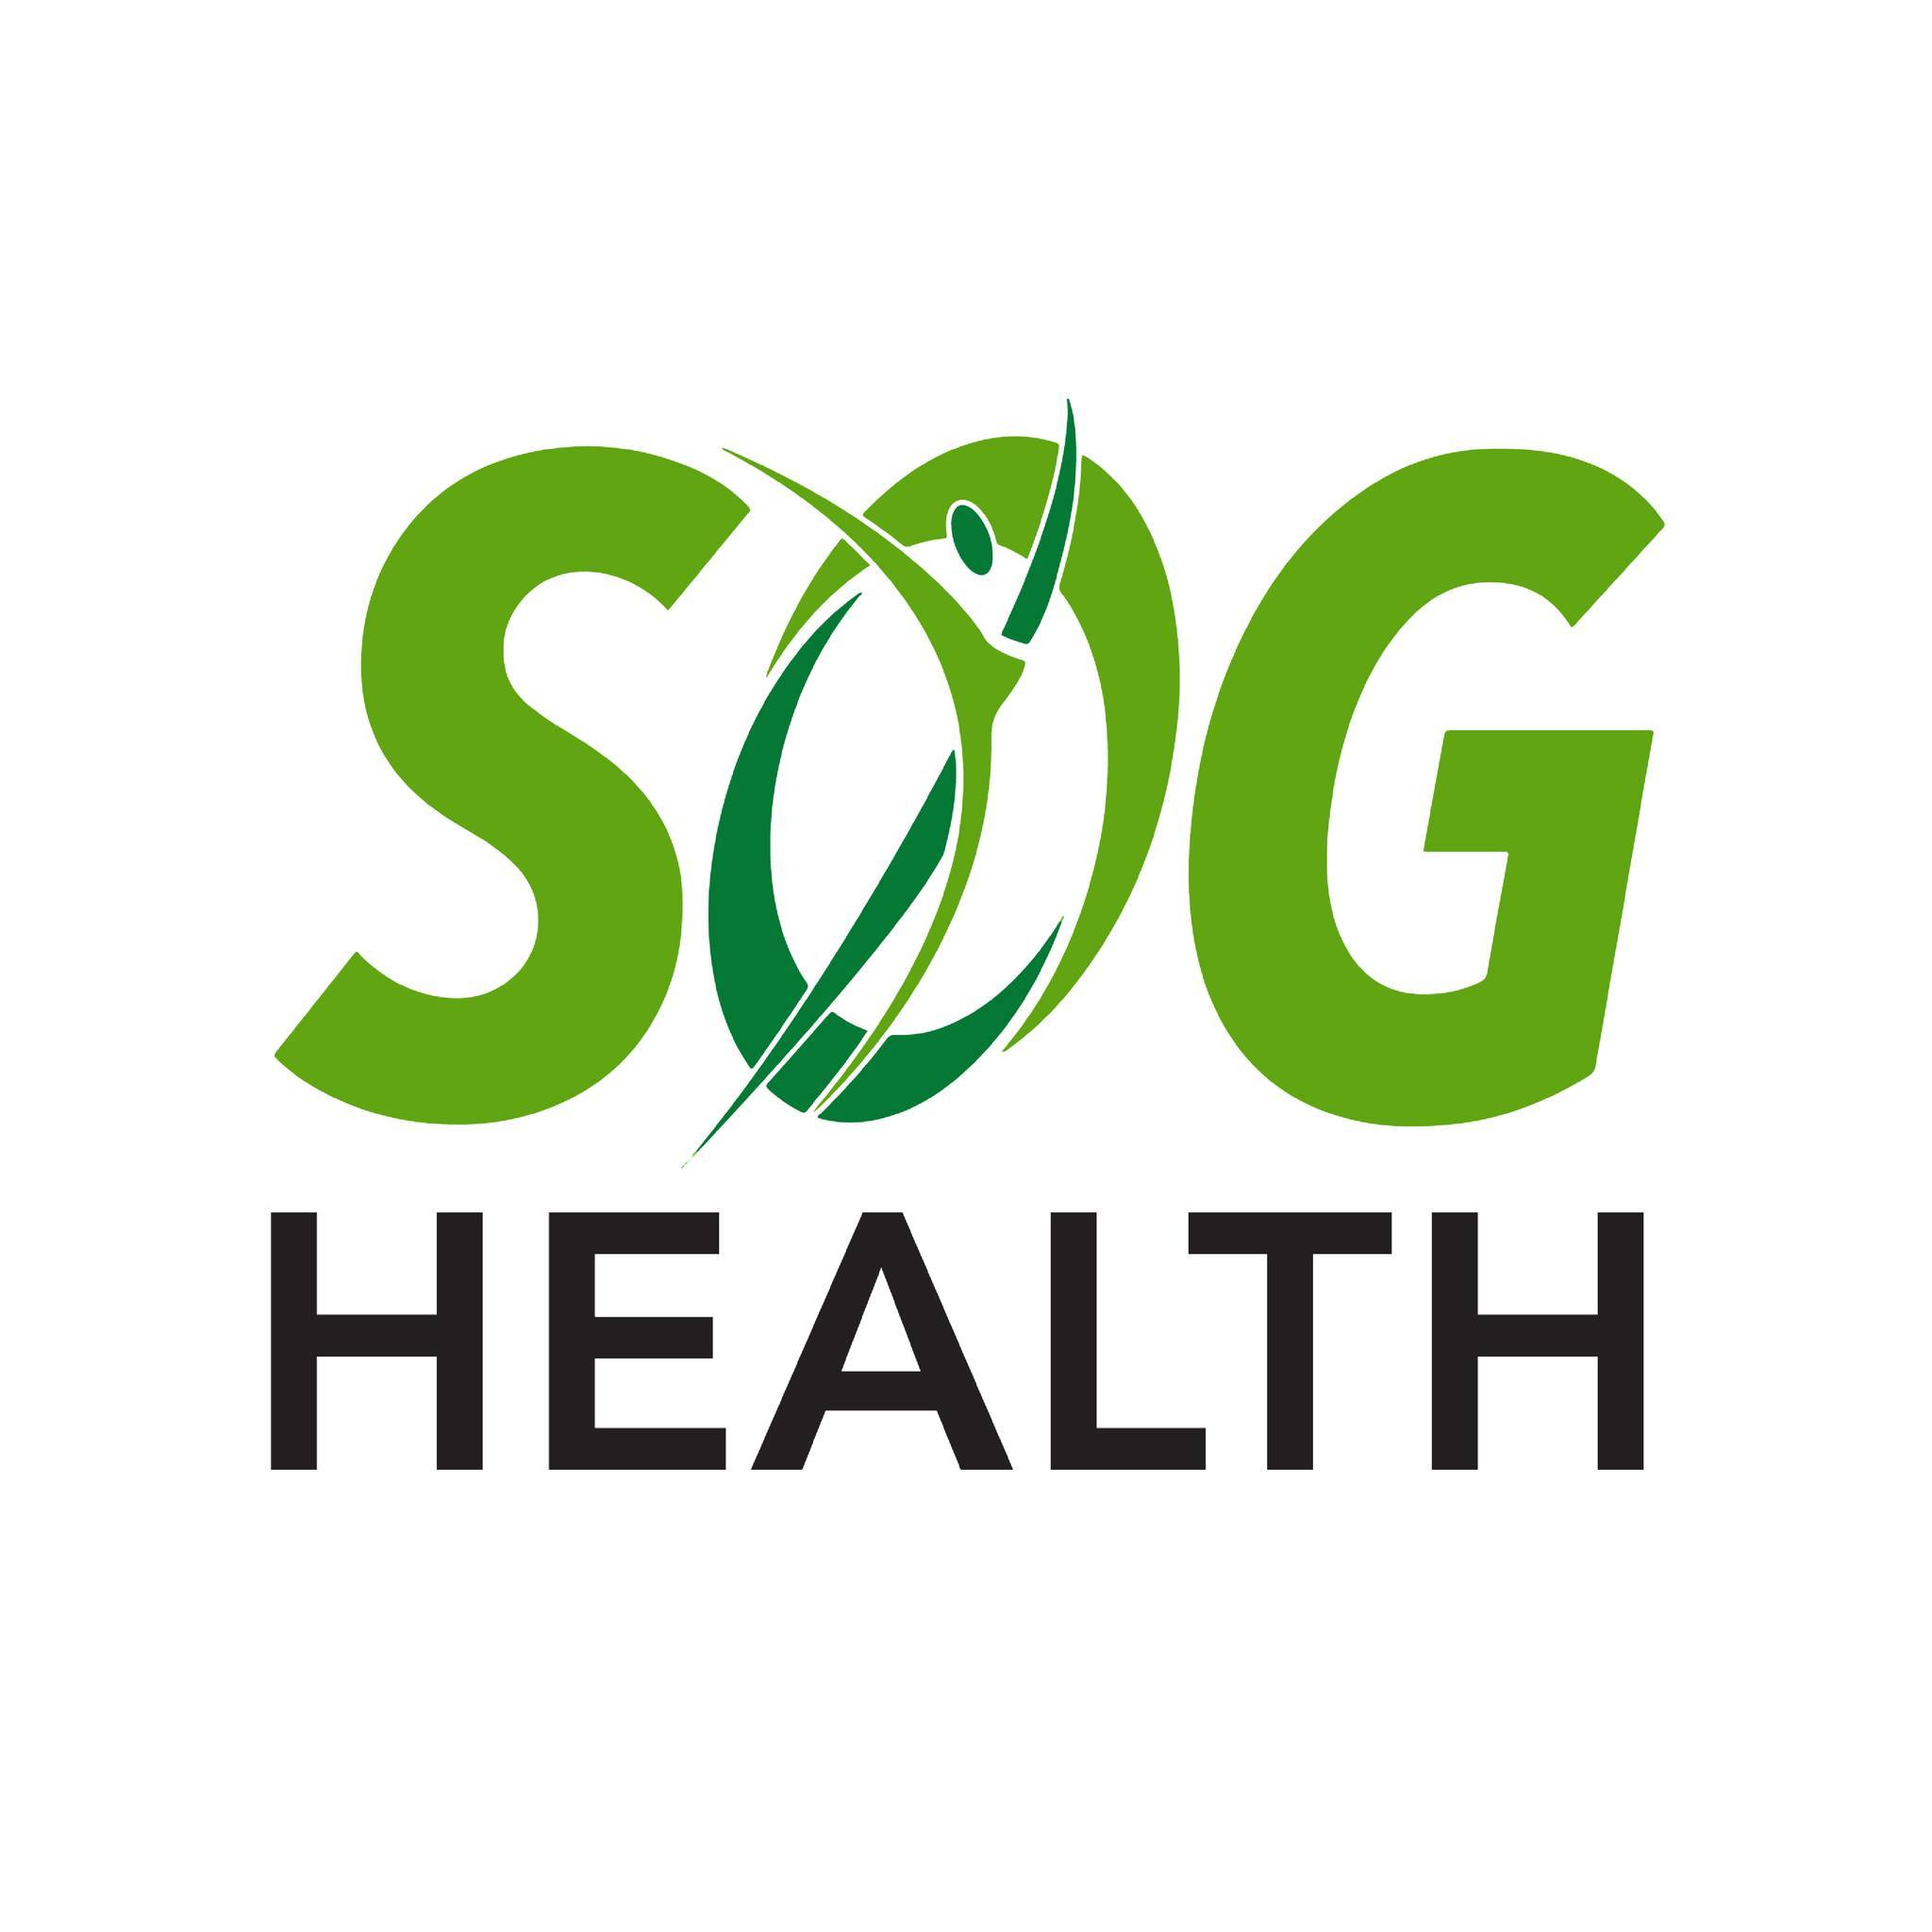 SOG Health Brand Logo